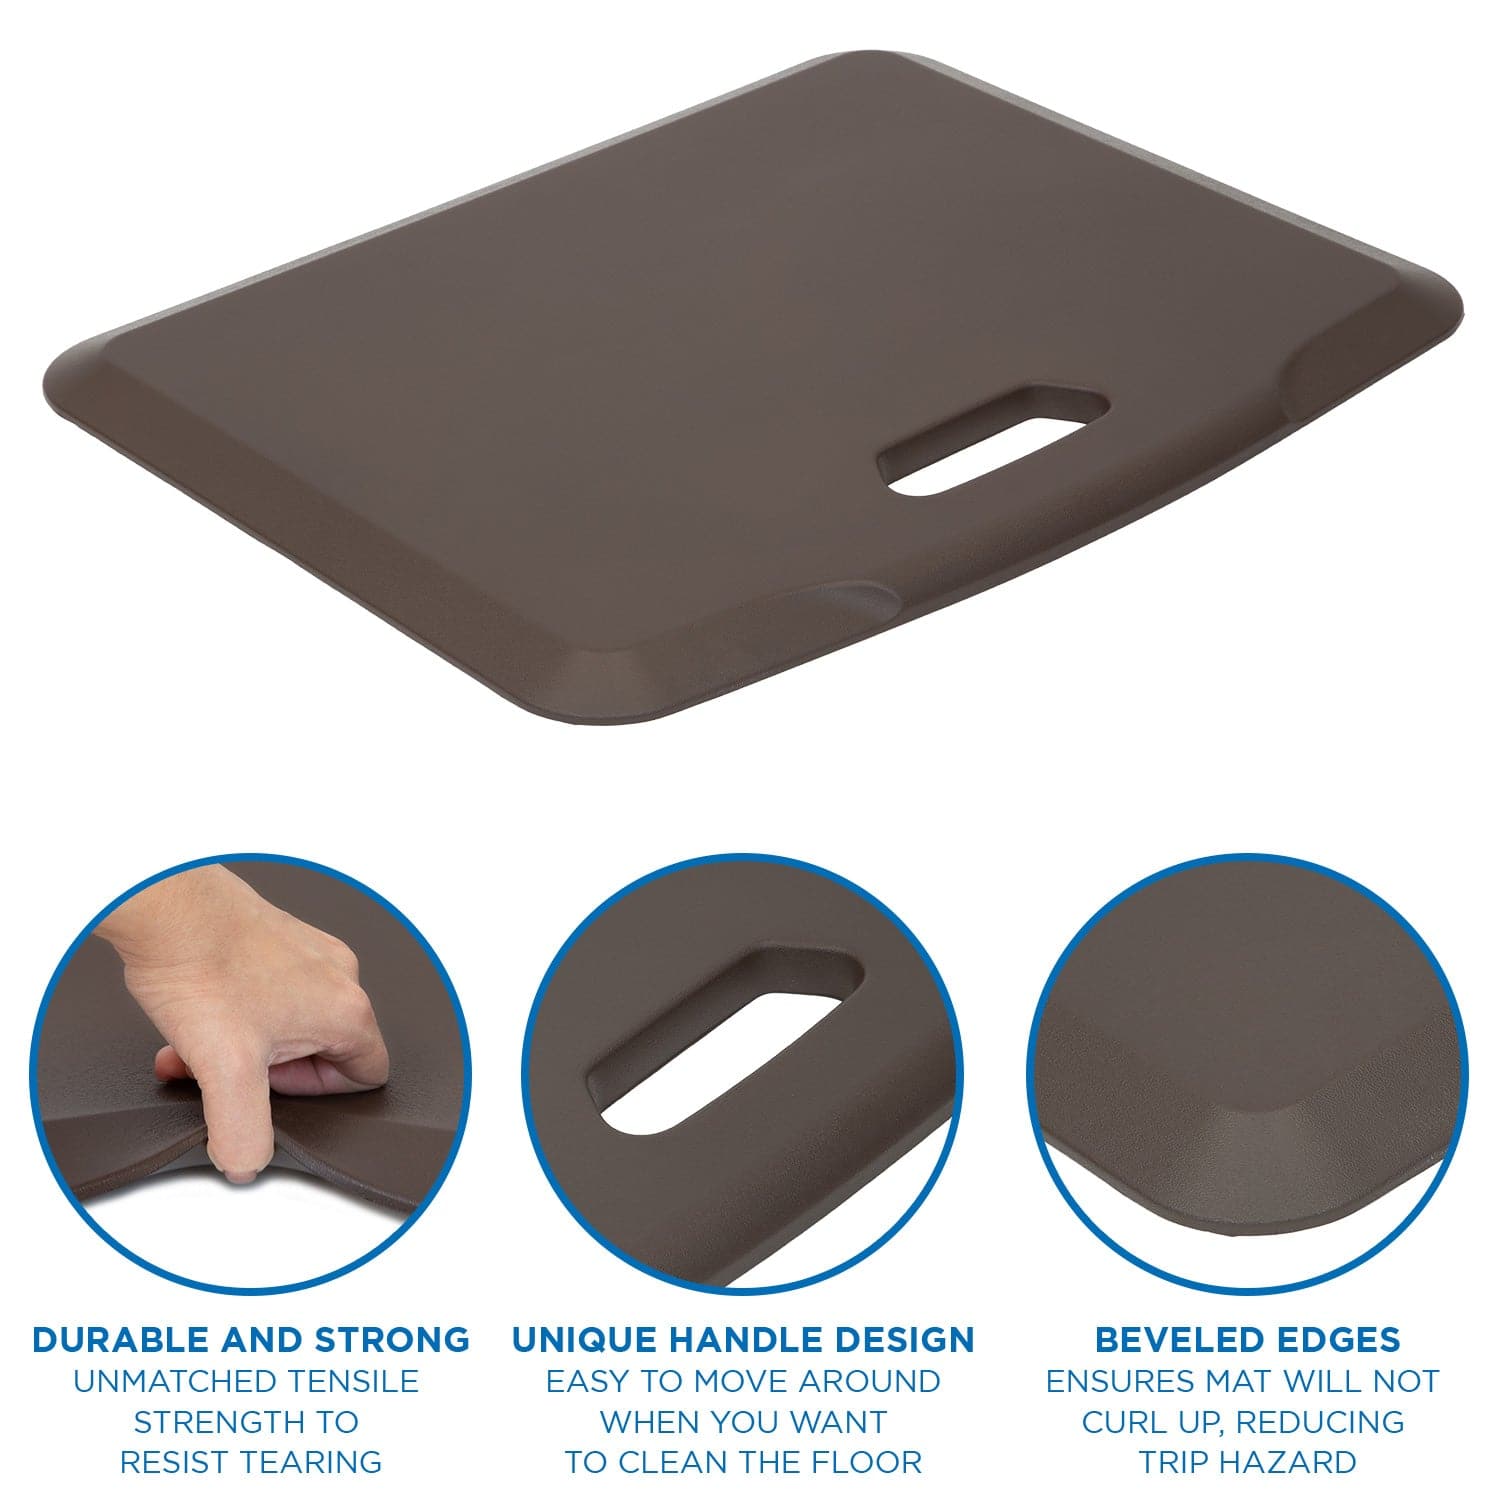 Portable Anti-Fatigue Floor Mat